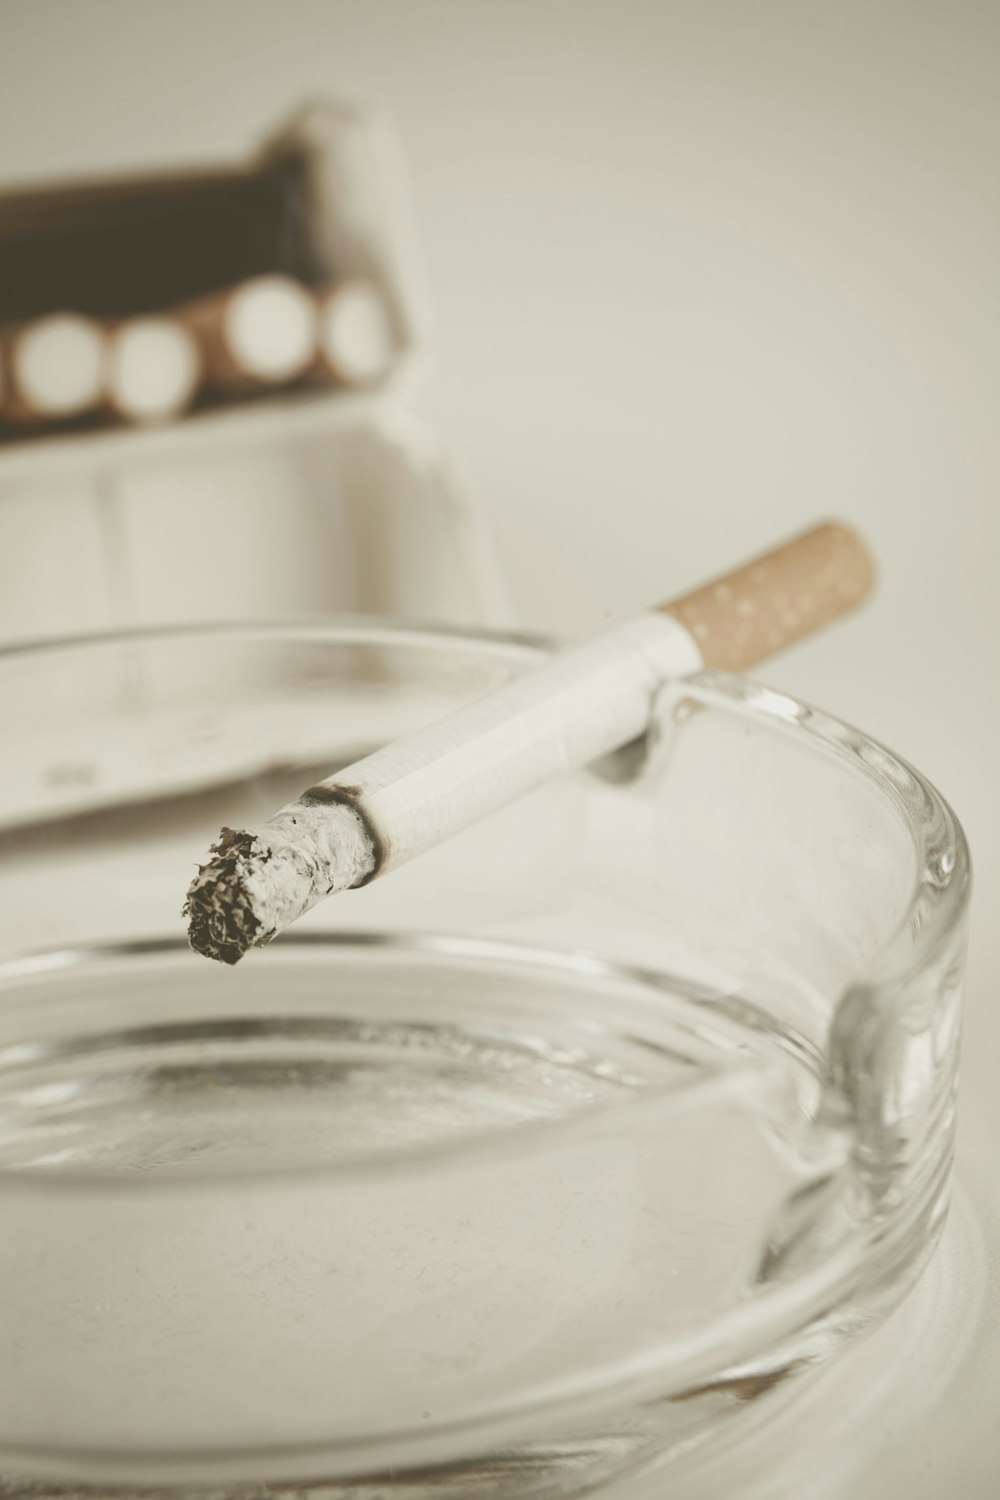 Cigarette stick photo – Free Ashtray Image on Unsplash